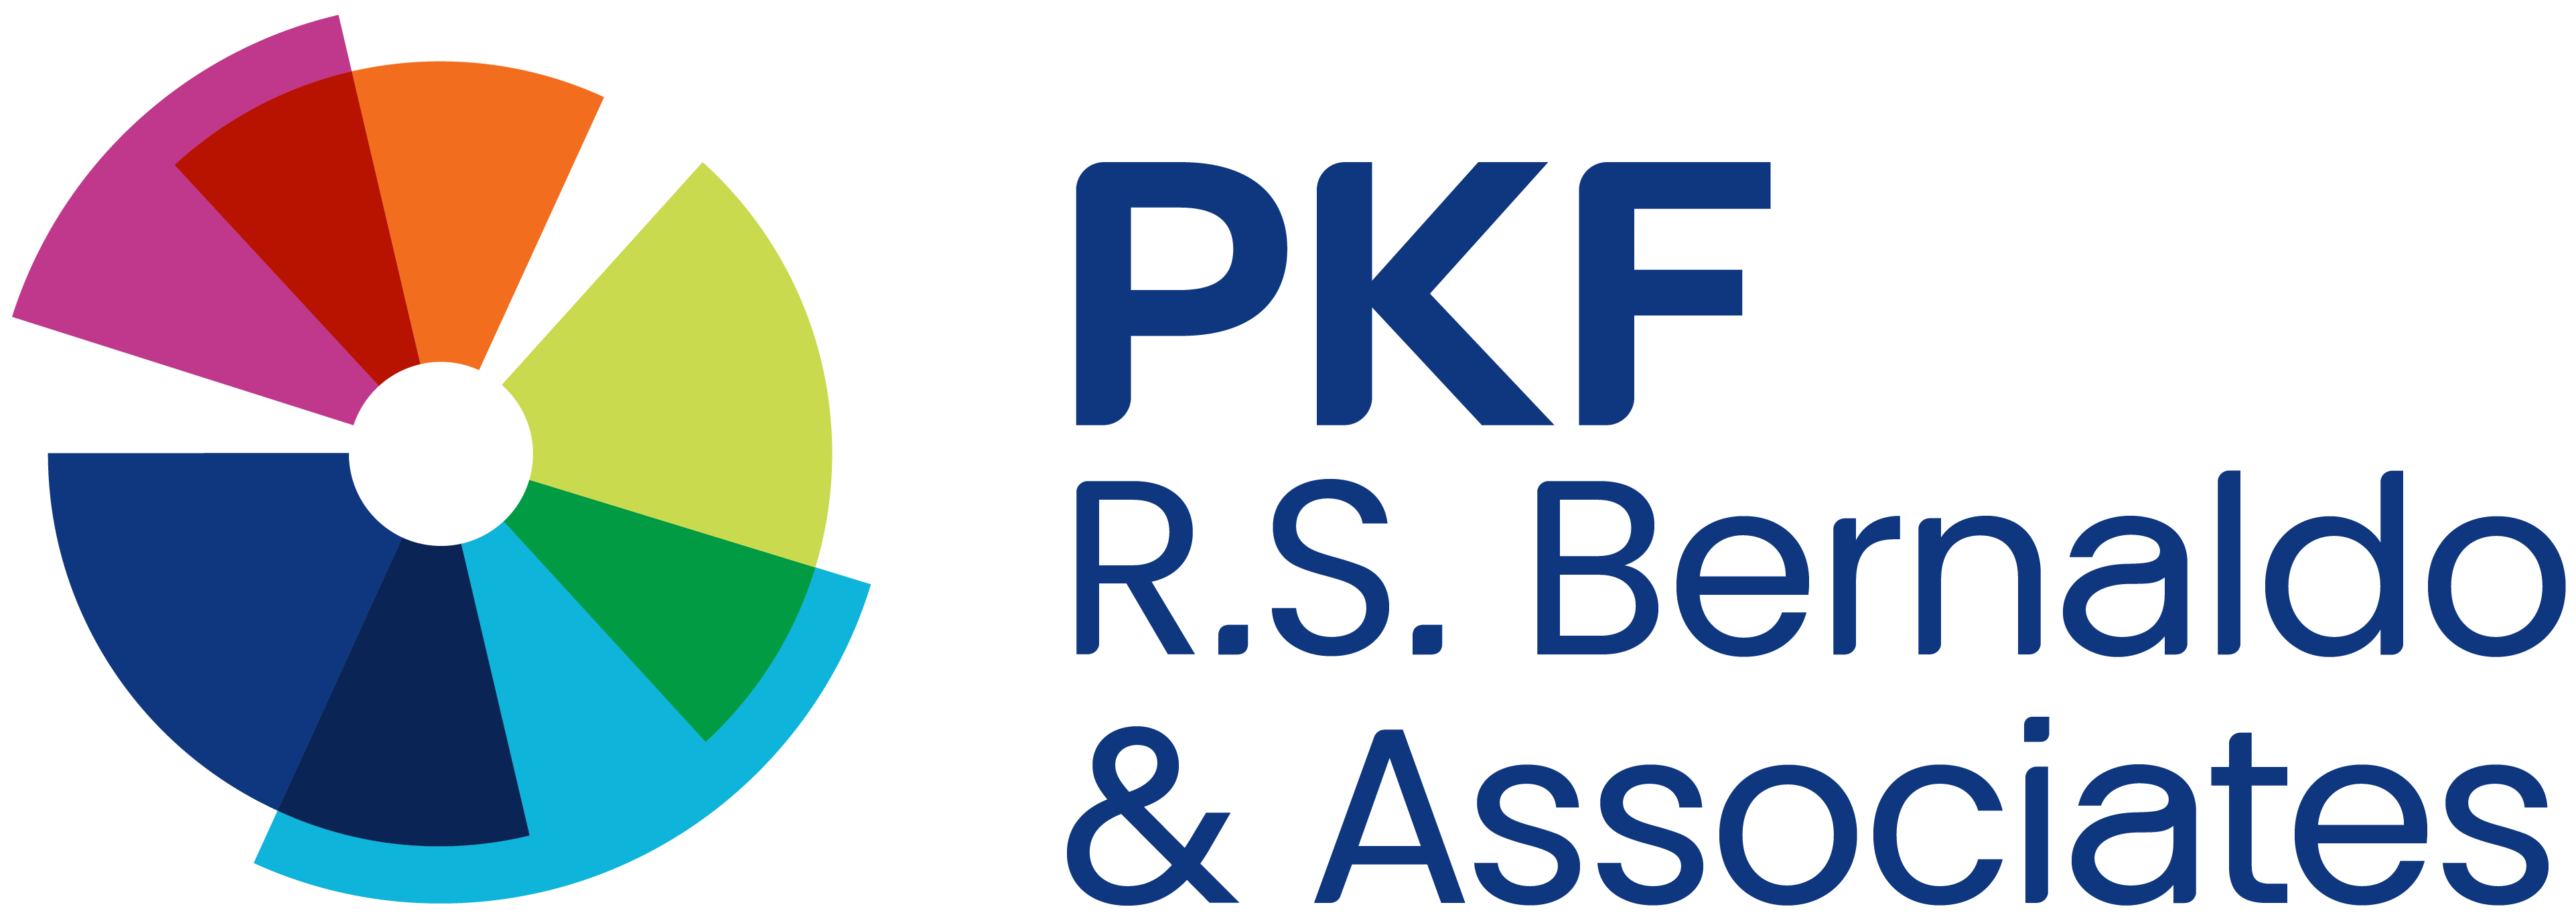 PKF R.S. Bernaldo & Associates